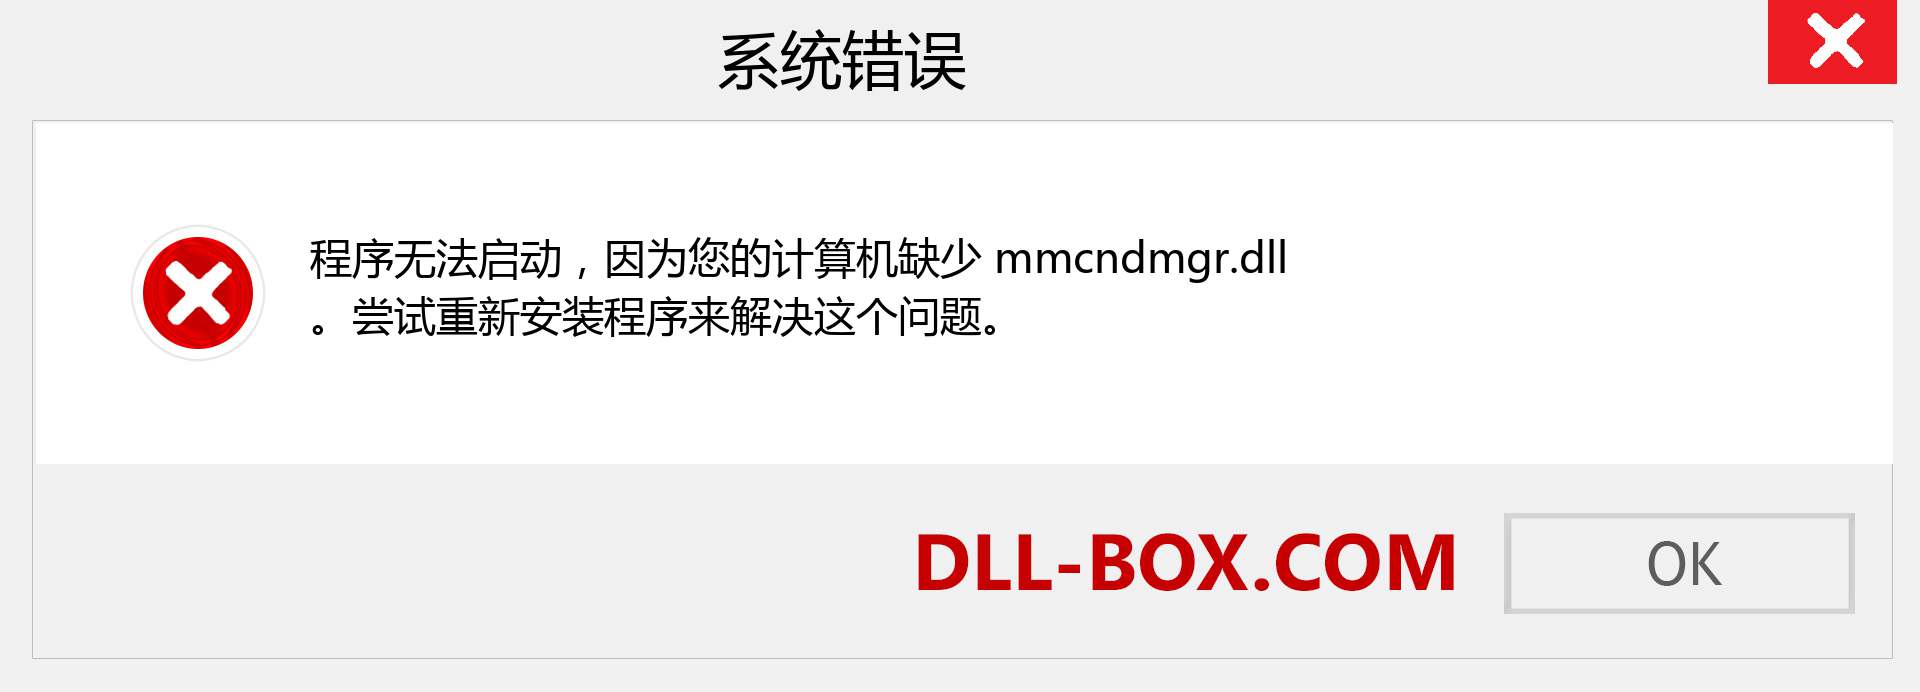 mmcndmgr.dll 文件丢失？。 适用于 Windows 7、8、10 的下载 - 修复 Windows、照片、图像上的 mmcndmgr dll 丢失错误